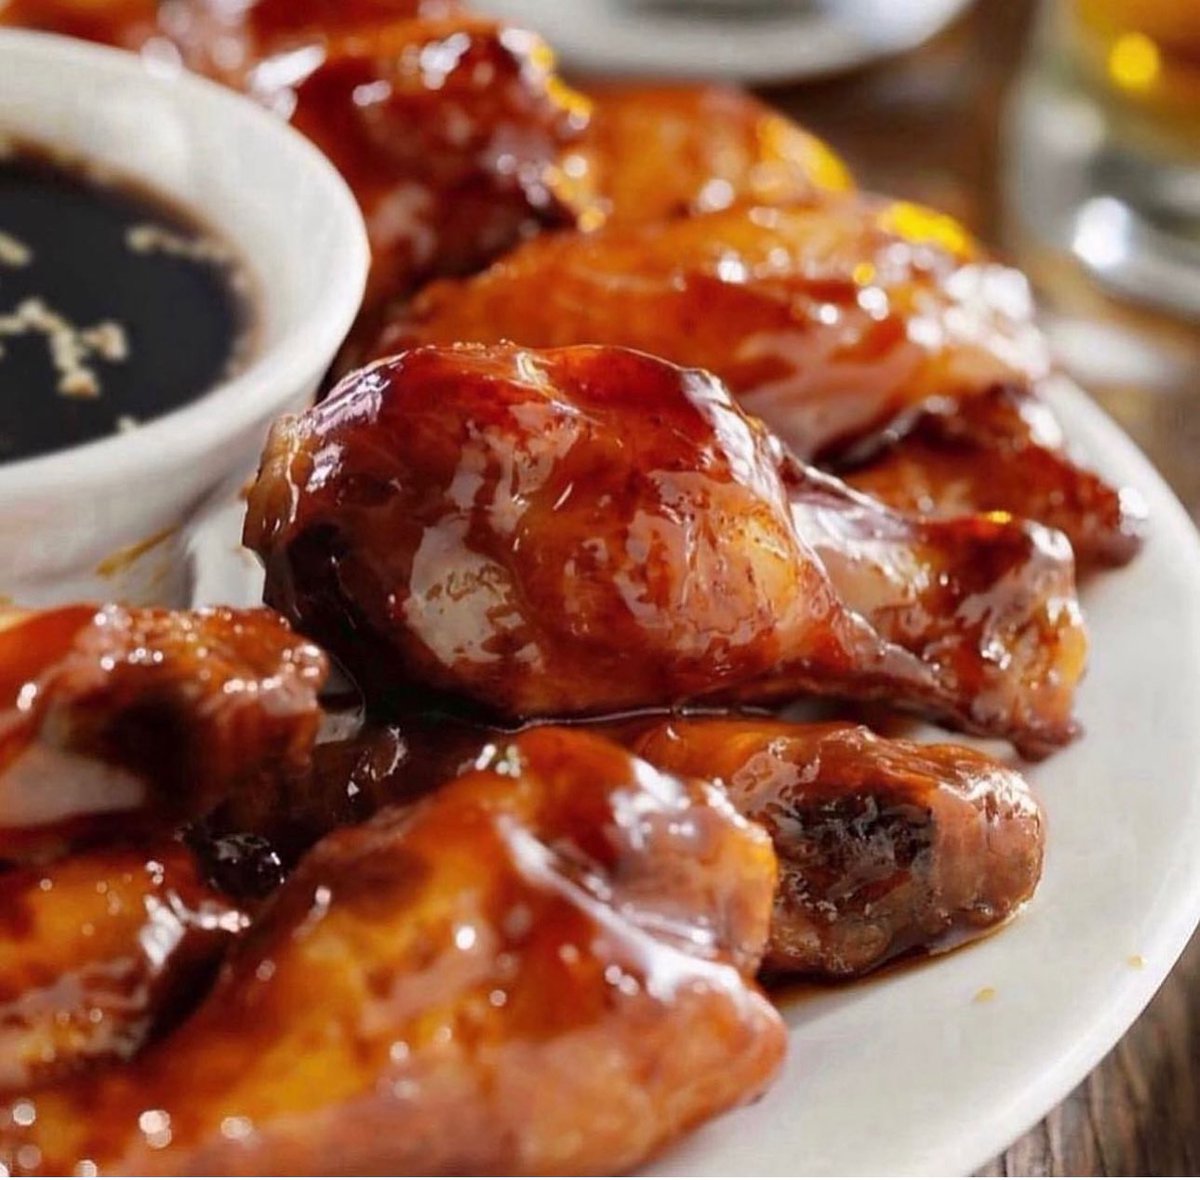 🐓#wingswednesday - Try our Chicken Wings dressed in Jameson BBQ Sauce 👌

#ireland #dublin #dublinfood #dublinfoodguide #barfood #gastrobar #pubgrub #tpsmithsbarandrestaurant